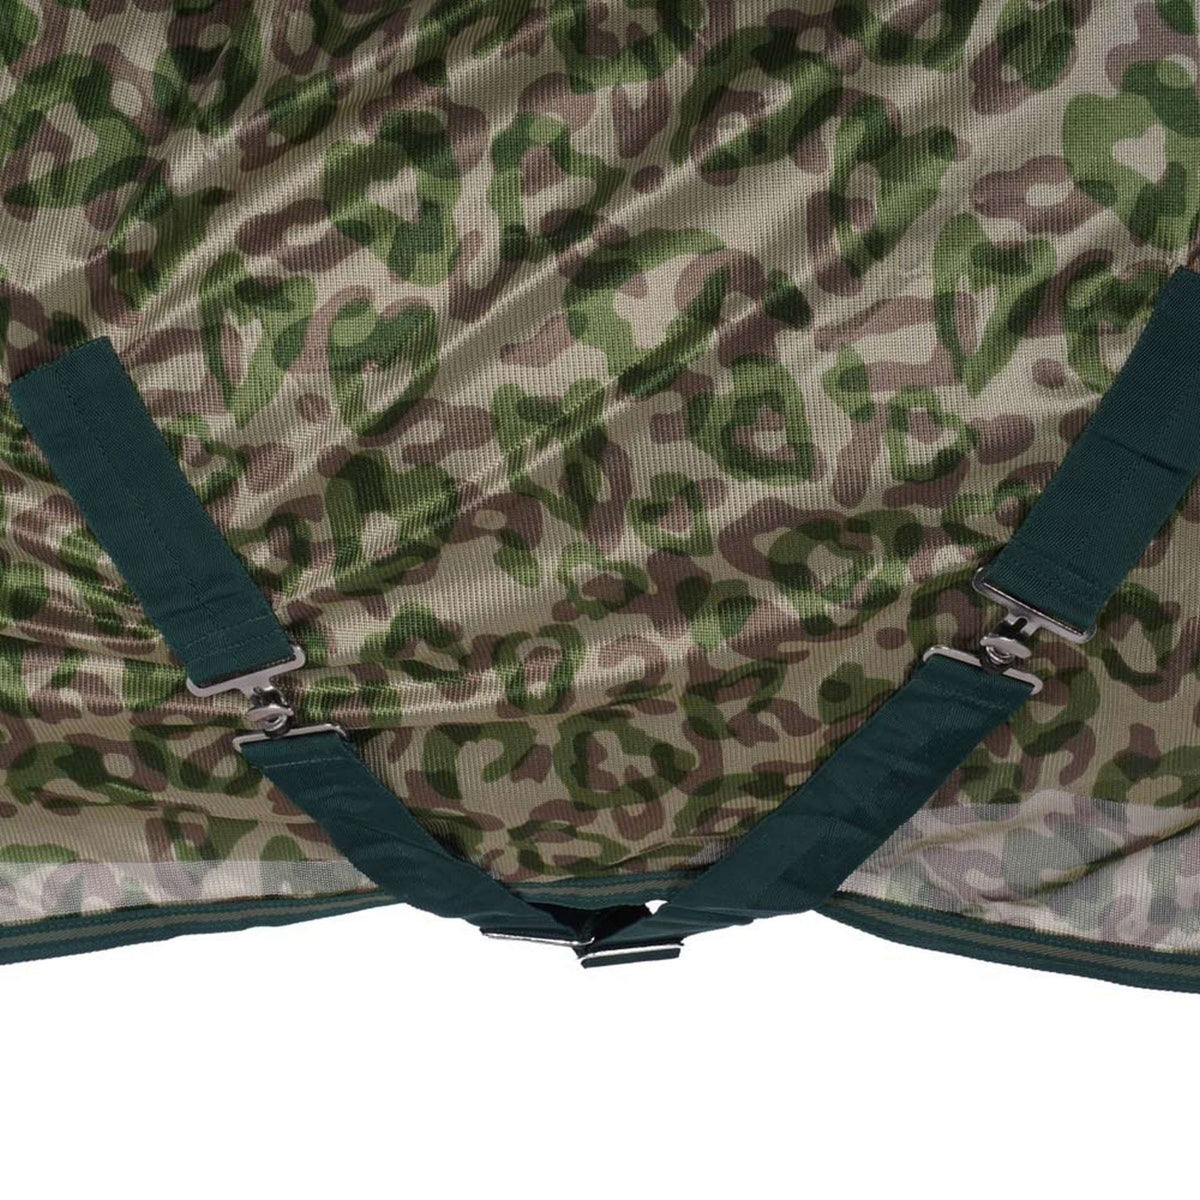 HKM Couverture Anti-Mouches Survival vert camouflage